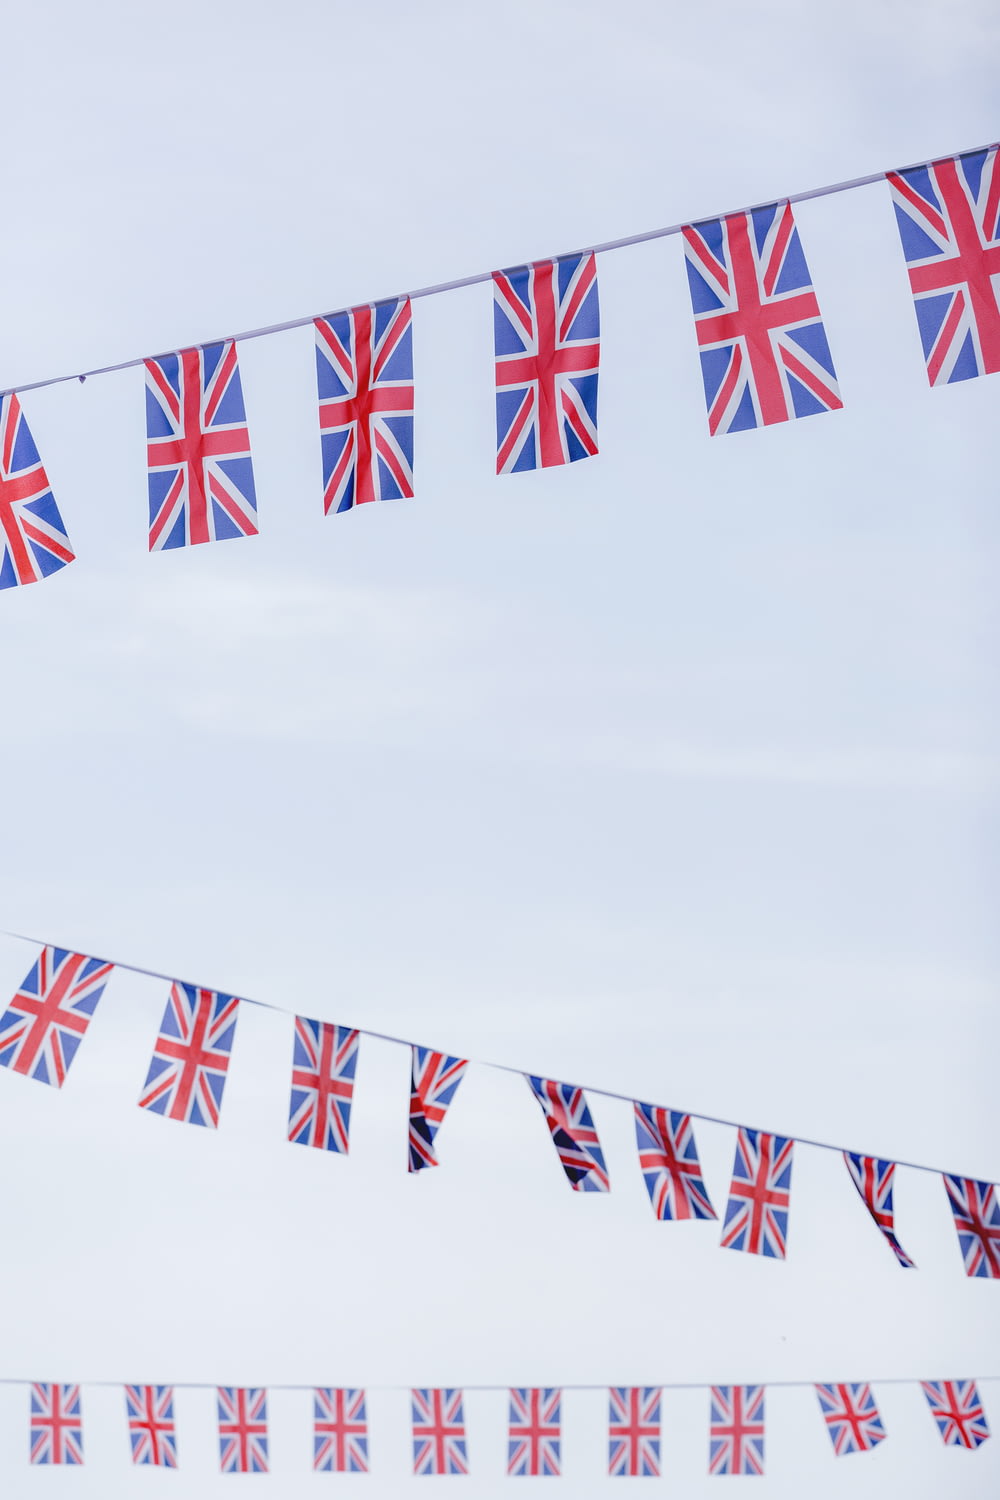 Buntings da bandeira britânica